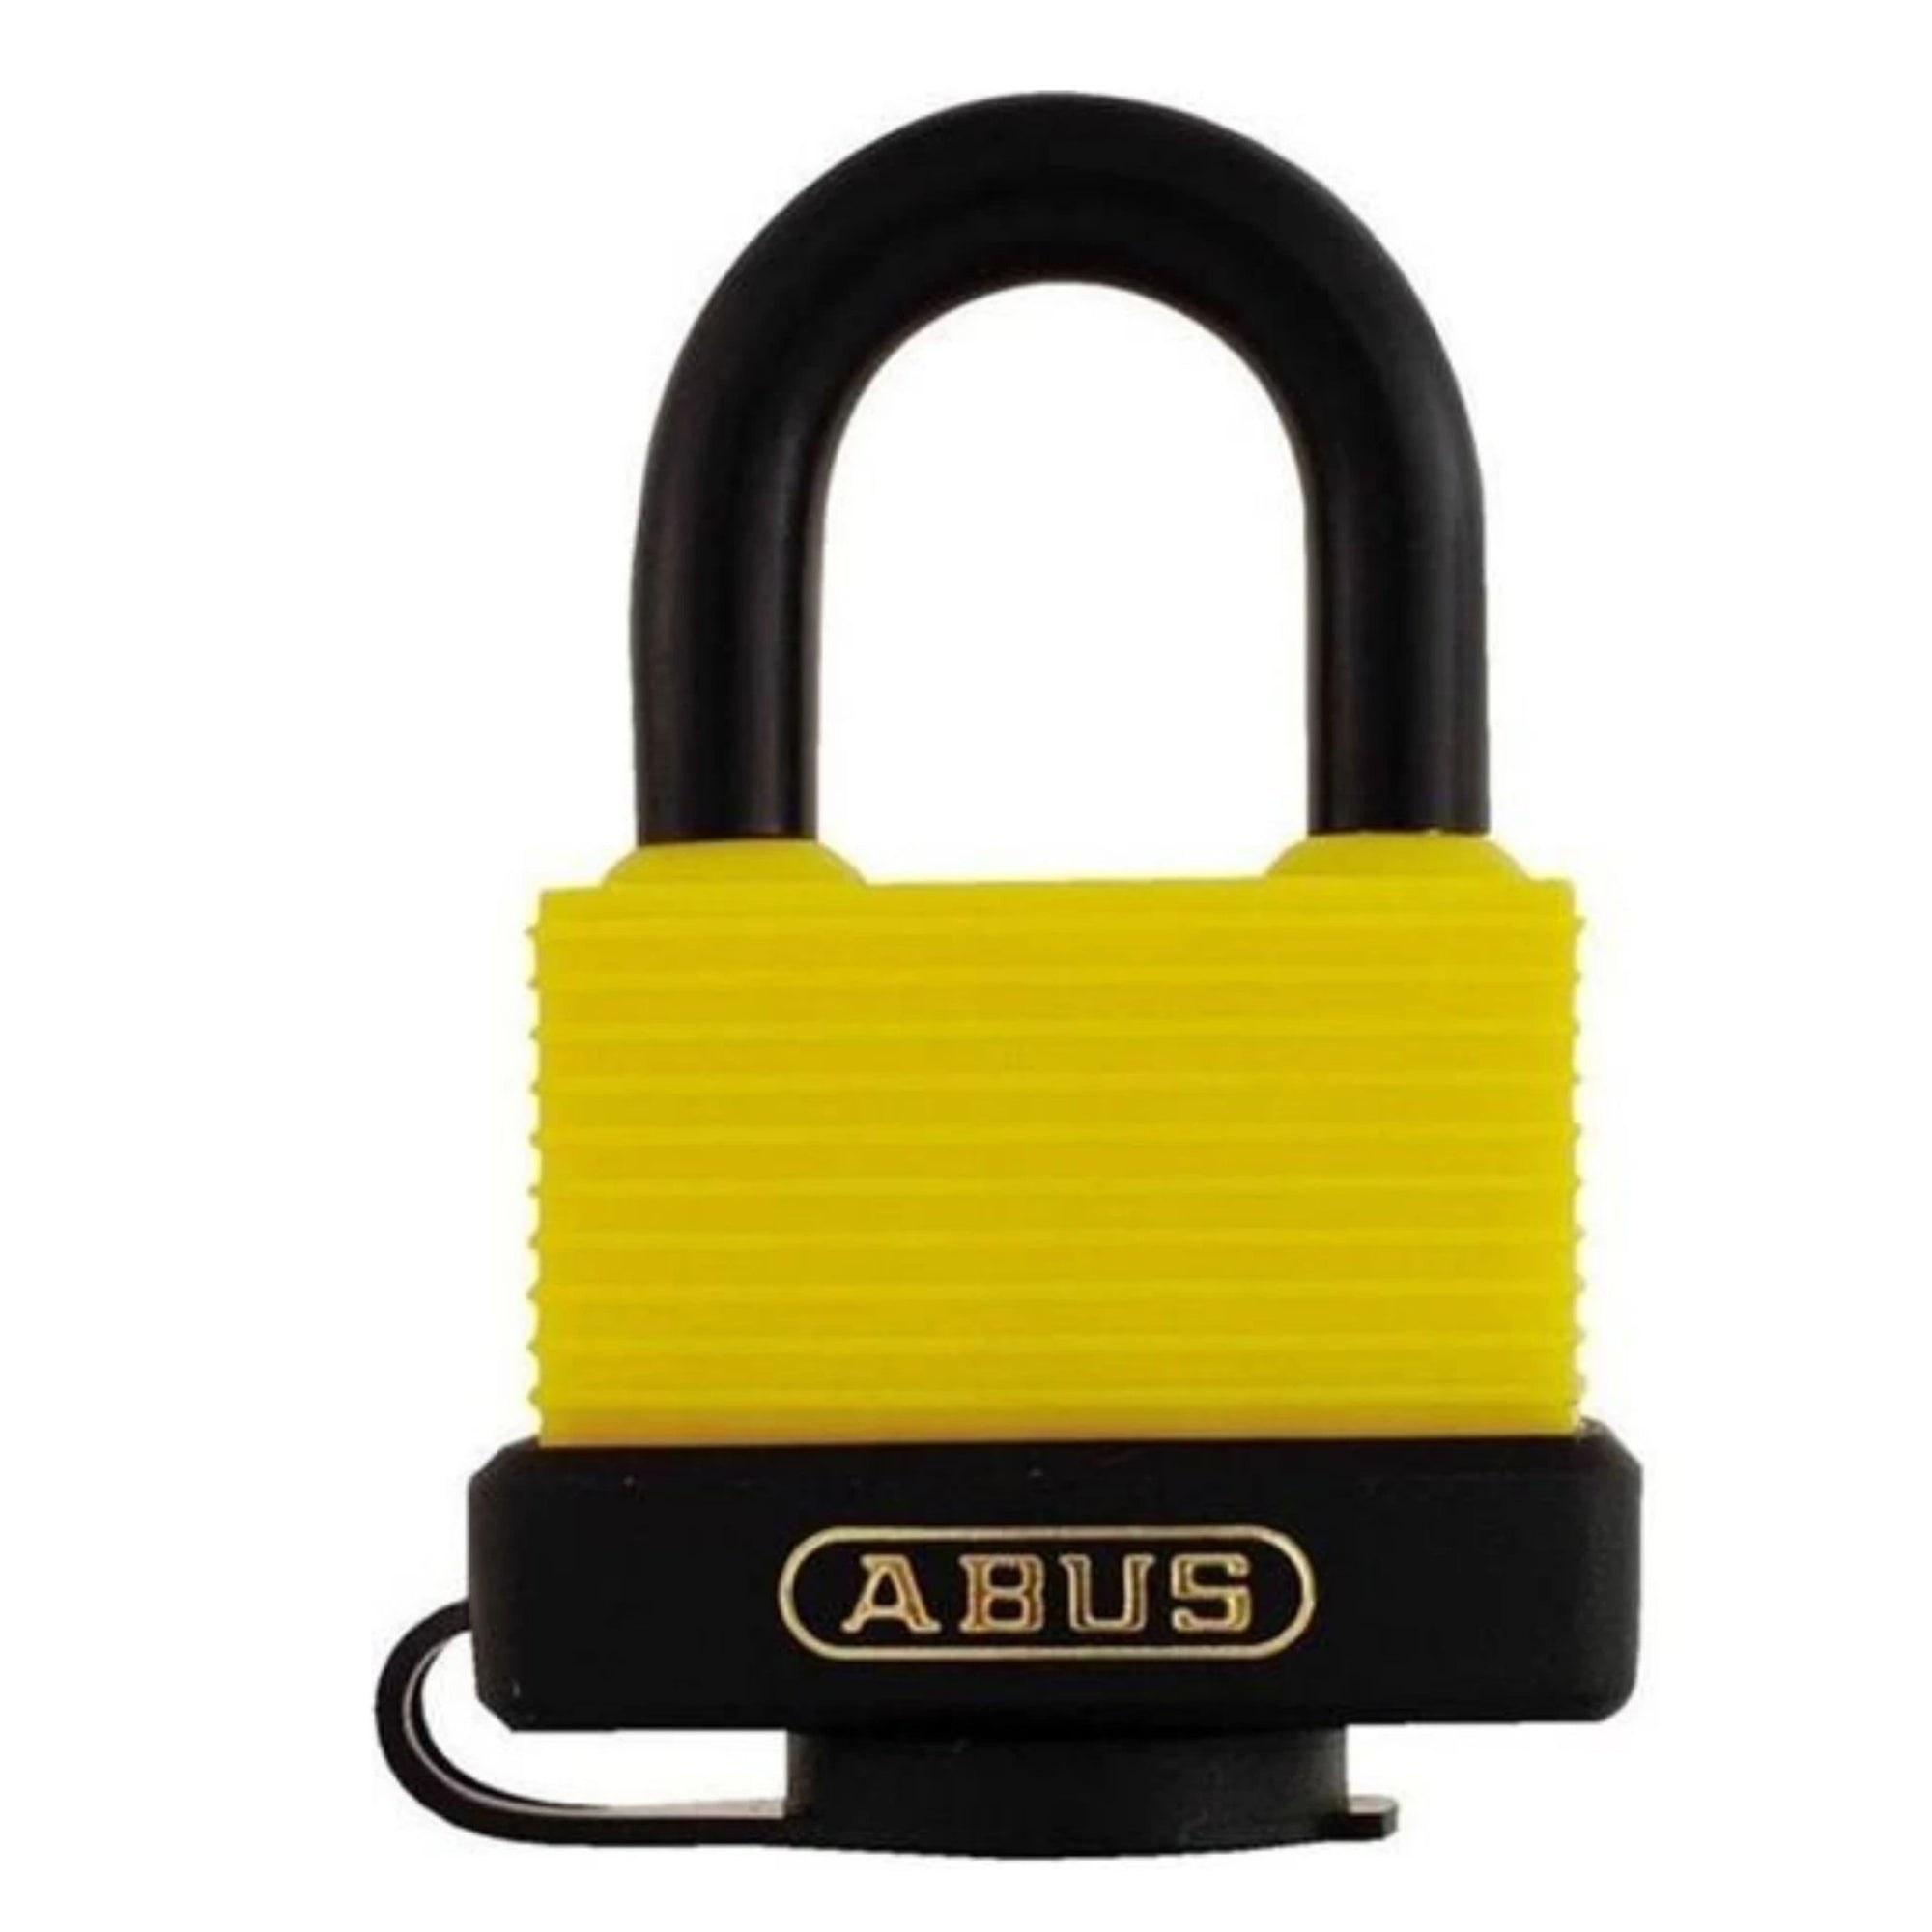 Abus 70/45 KA 6401 Lock Keyed Alike Weatherproof Brass Padlocks Keyed Alike to Match Existing Key Number KA6401 - The Lock Source